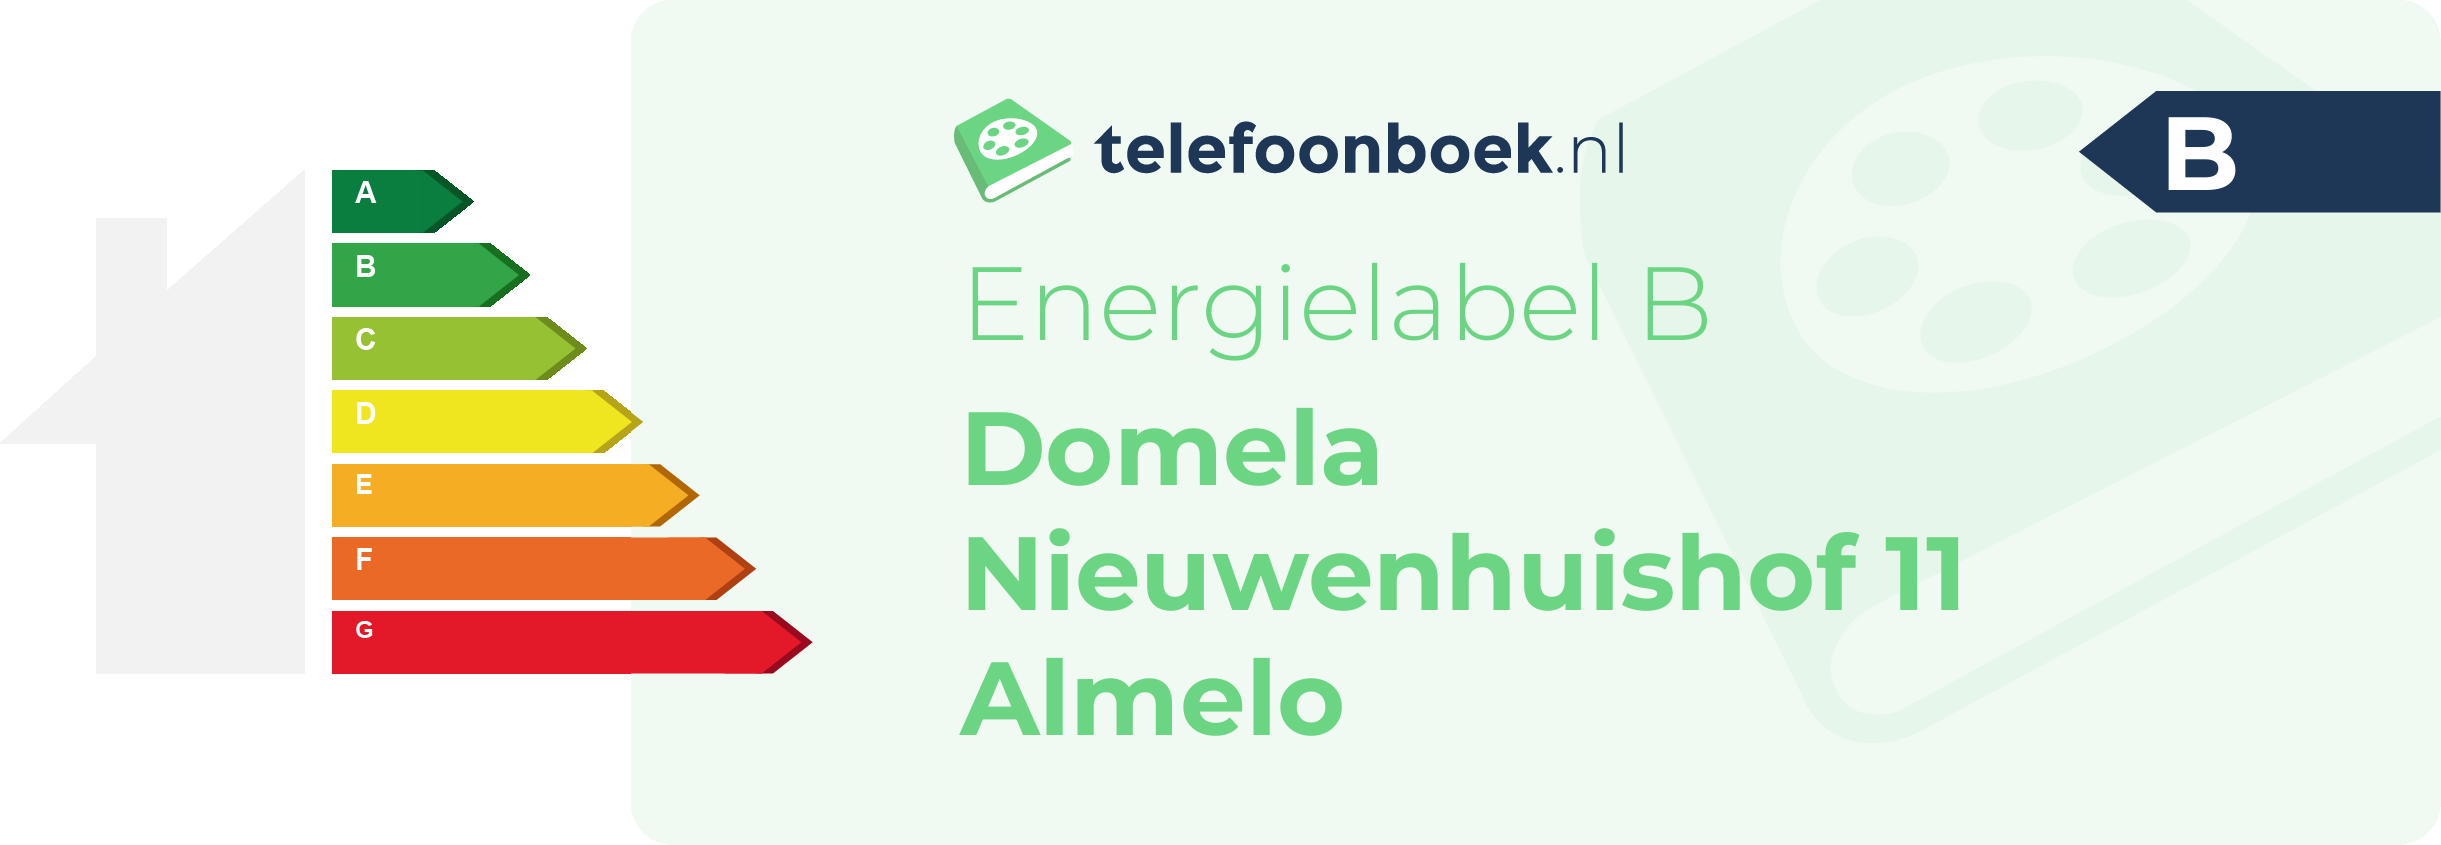 Energielabel Domela Nieuwenhuishof 11 Almelo